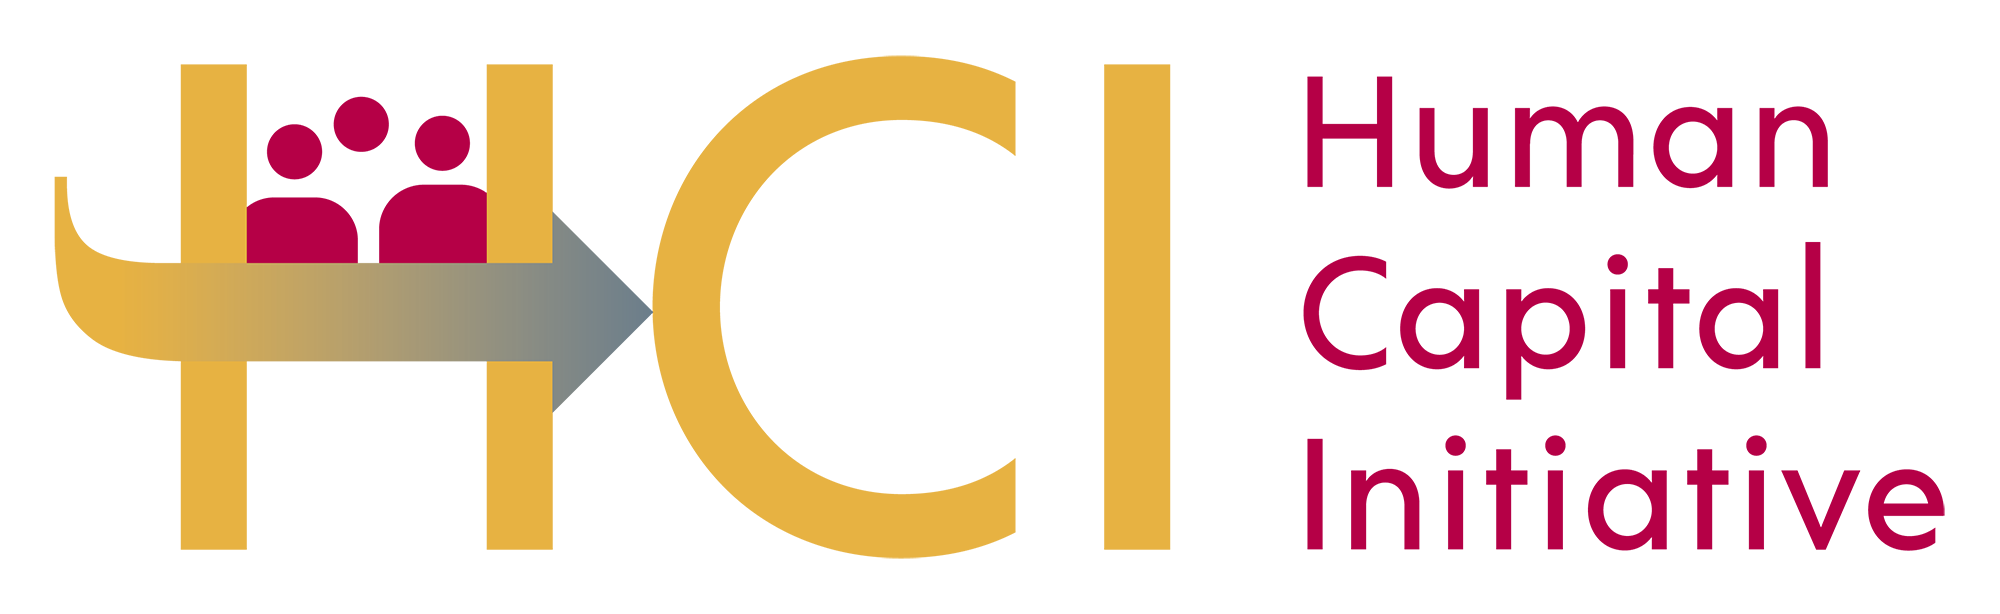 Human Capital Initiative (HCI) Logo